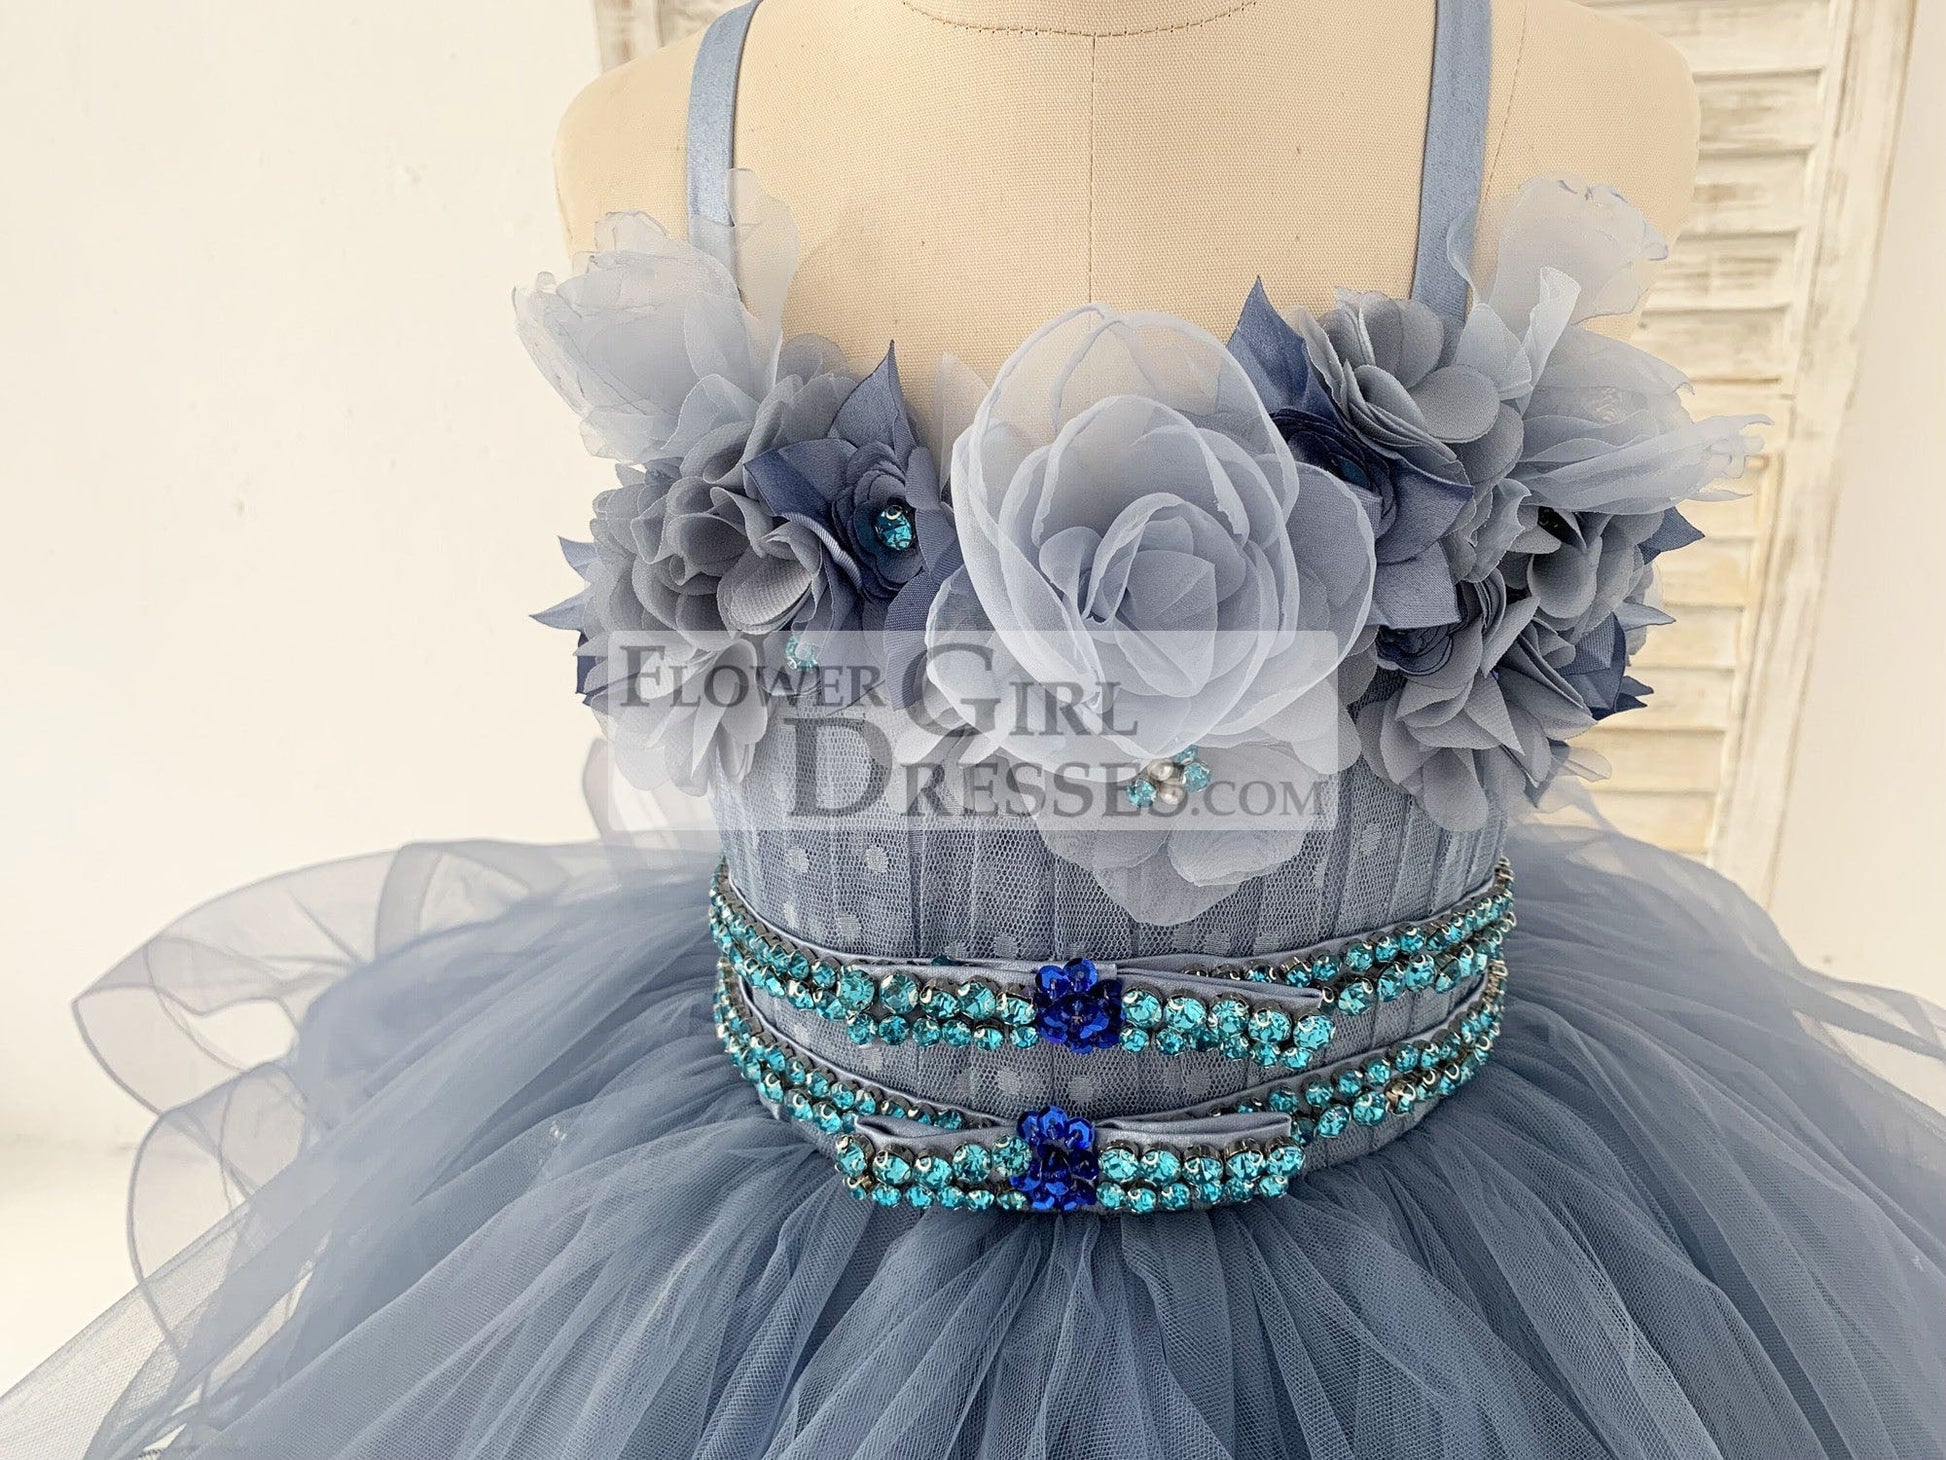 Beaded Dusty Blue Polka Dots Tulle Wedding Flower Girl Dress Kids Party Dress